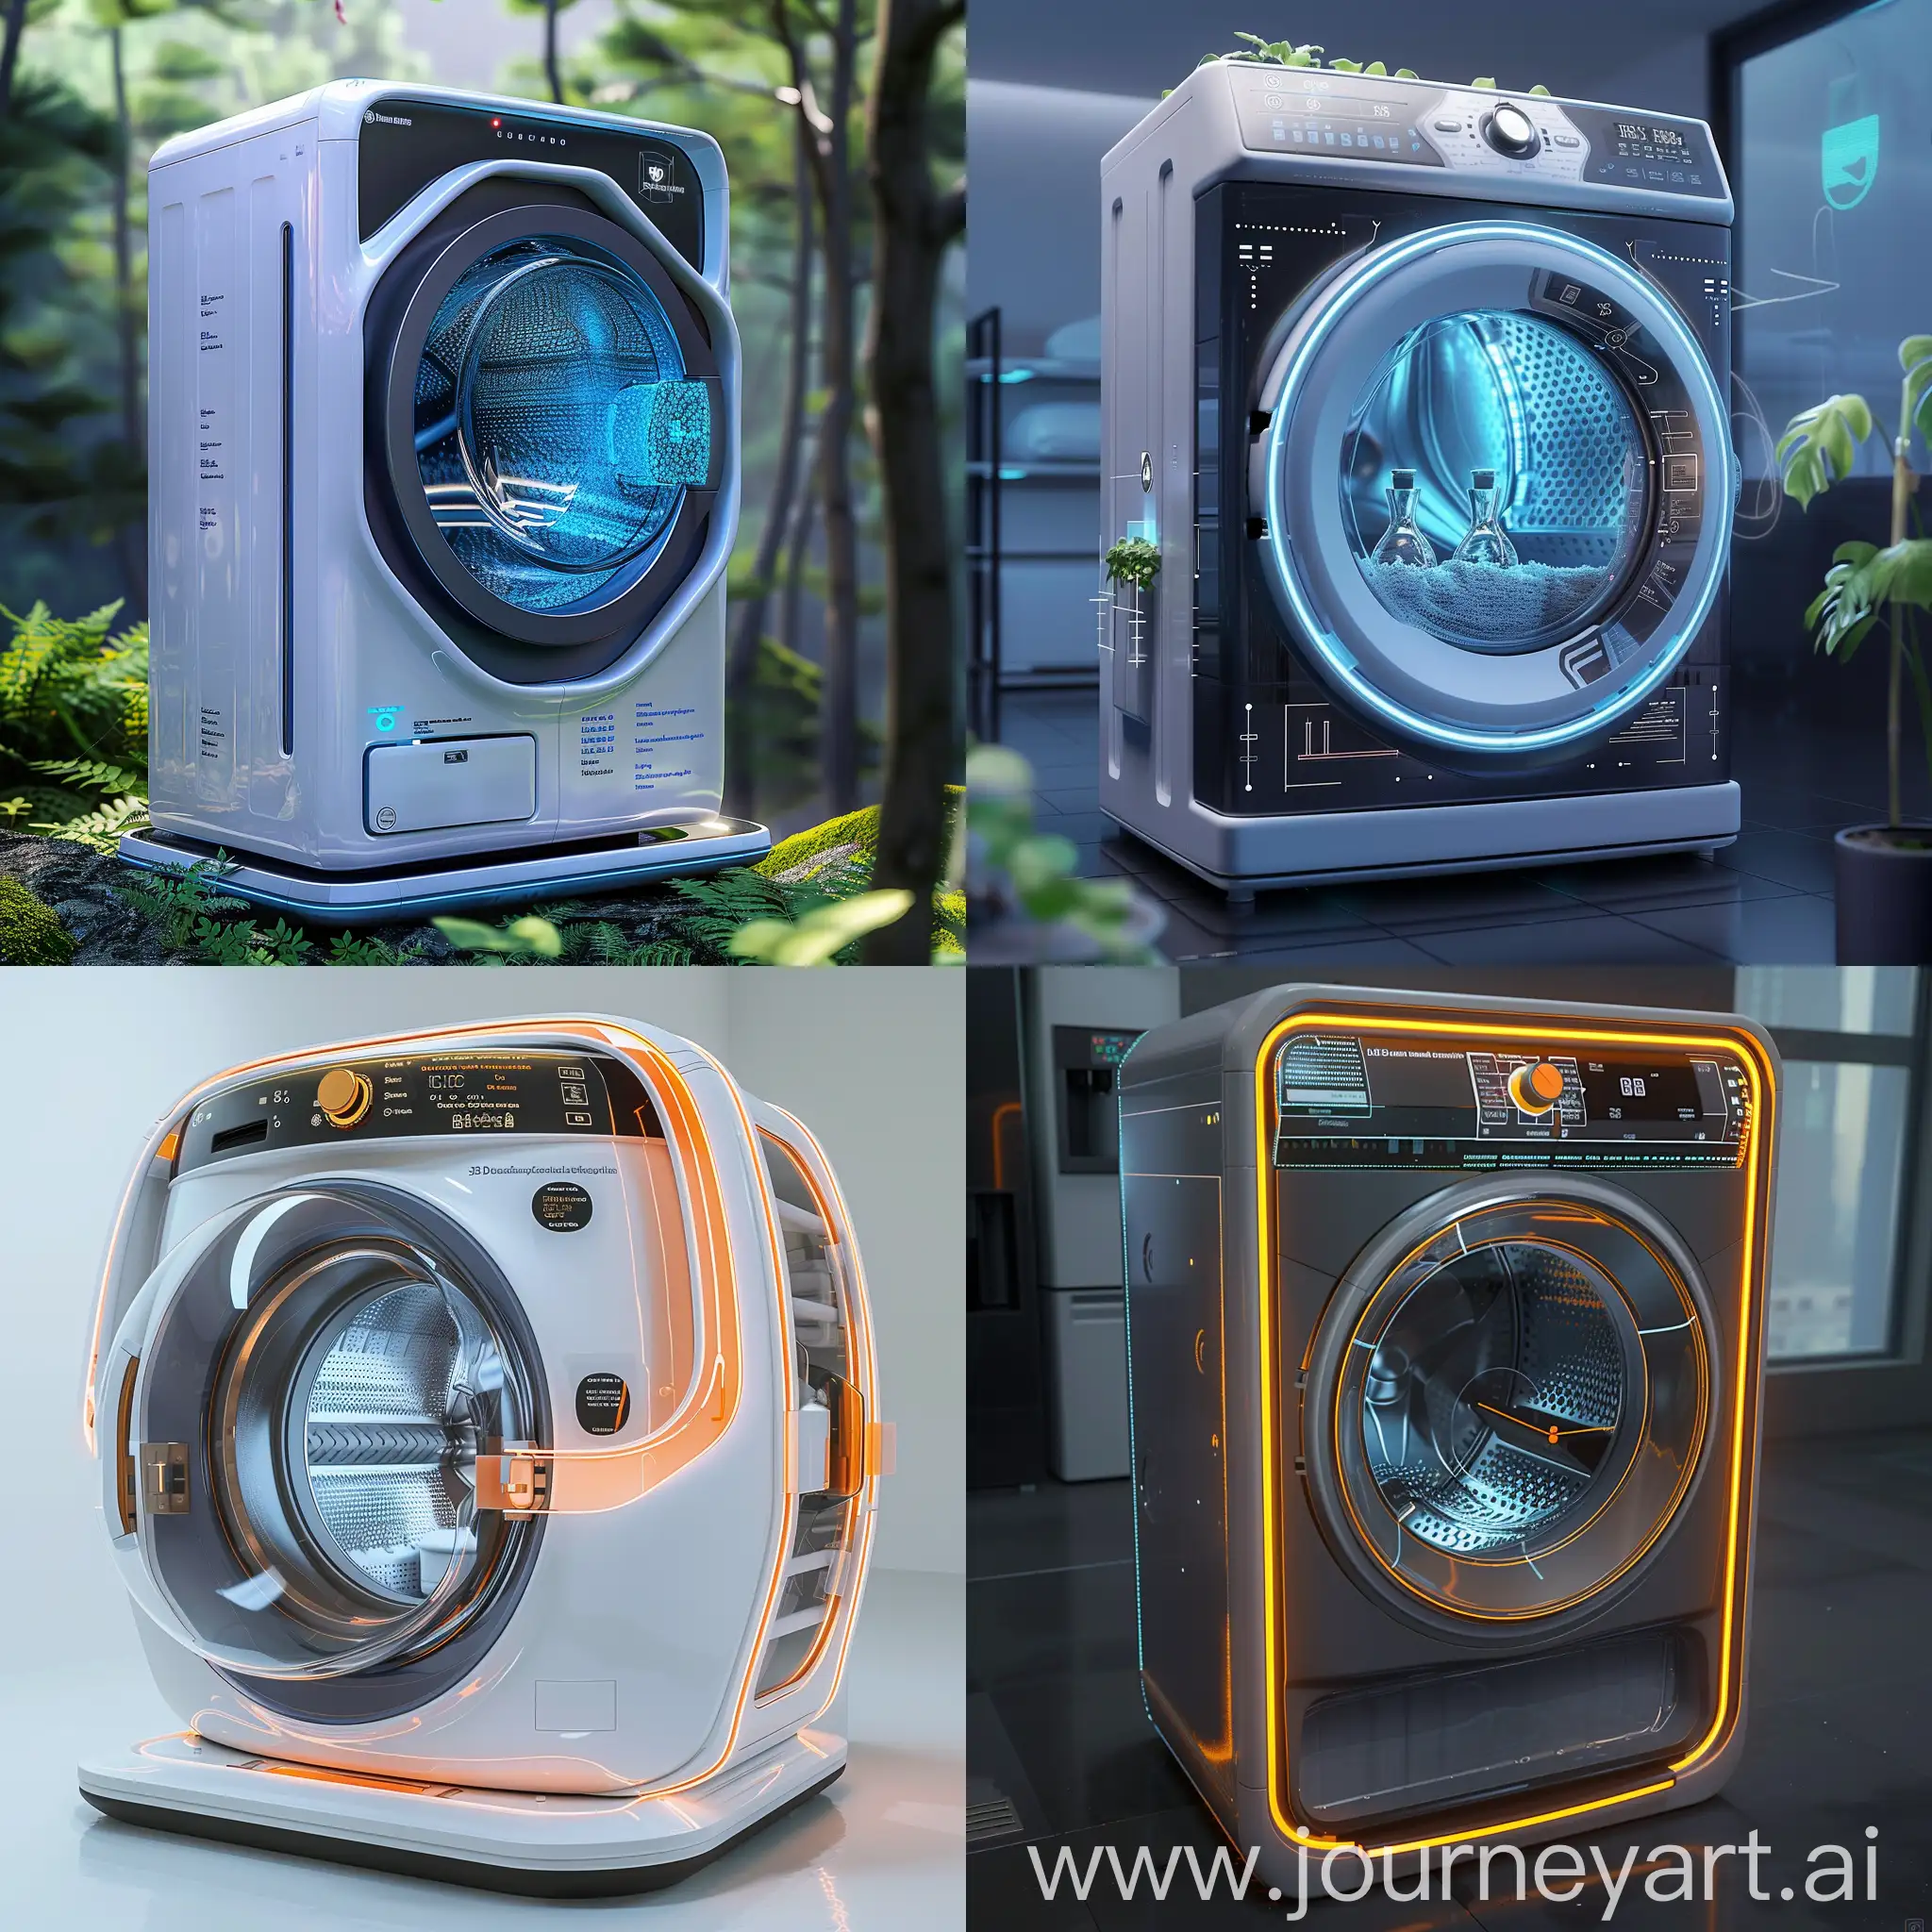 Advanced-AIPowered-Futuristic-Washing-Machine-with-Integrated-Smart-Technologies